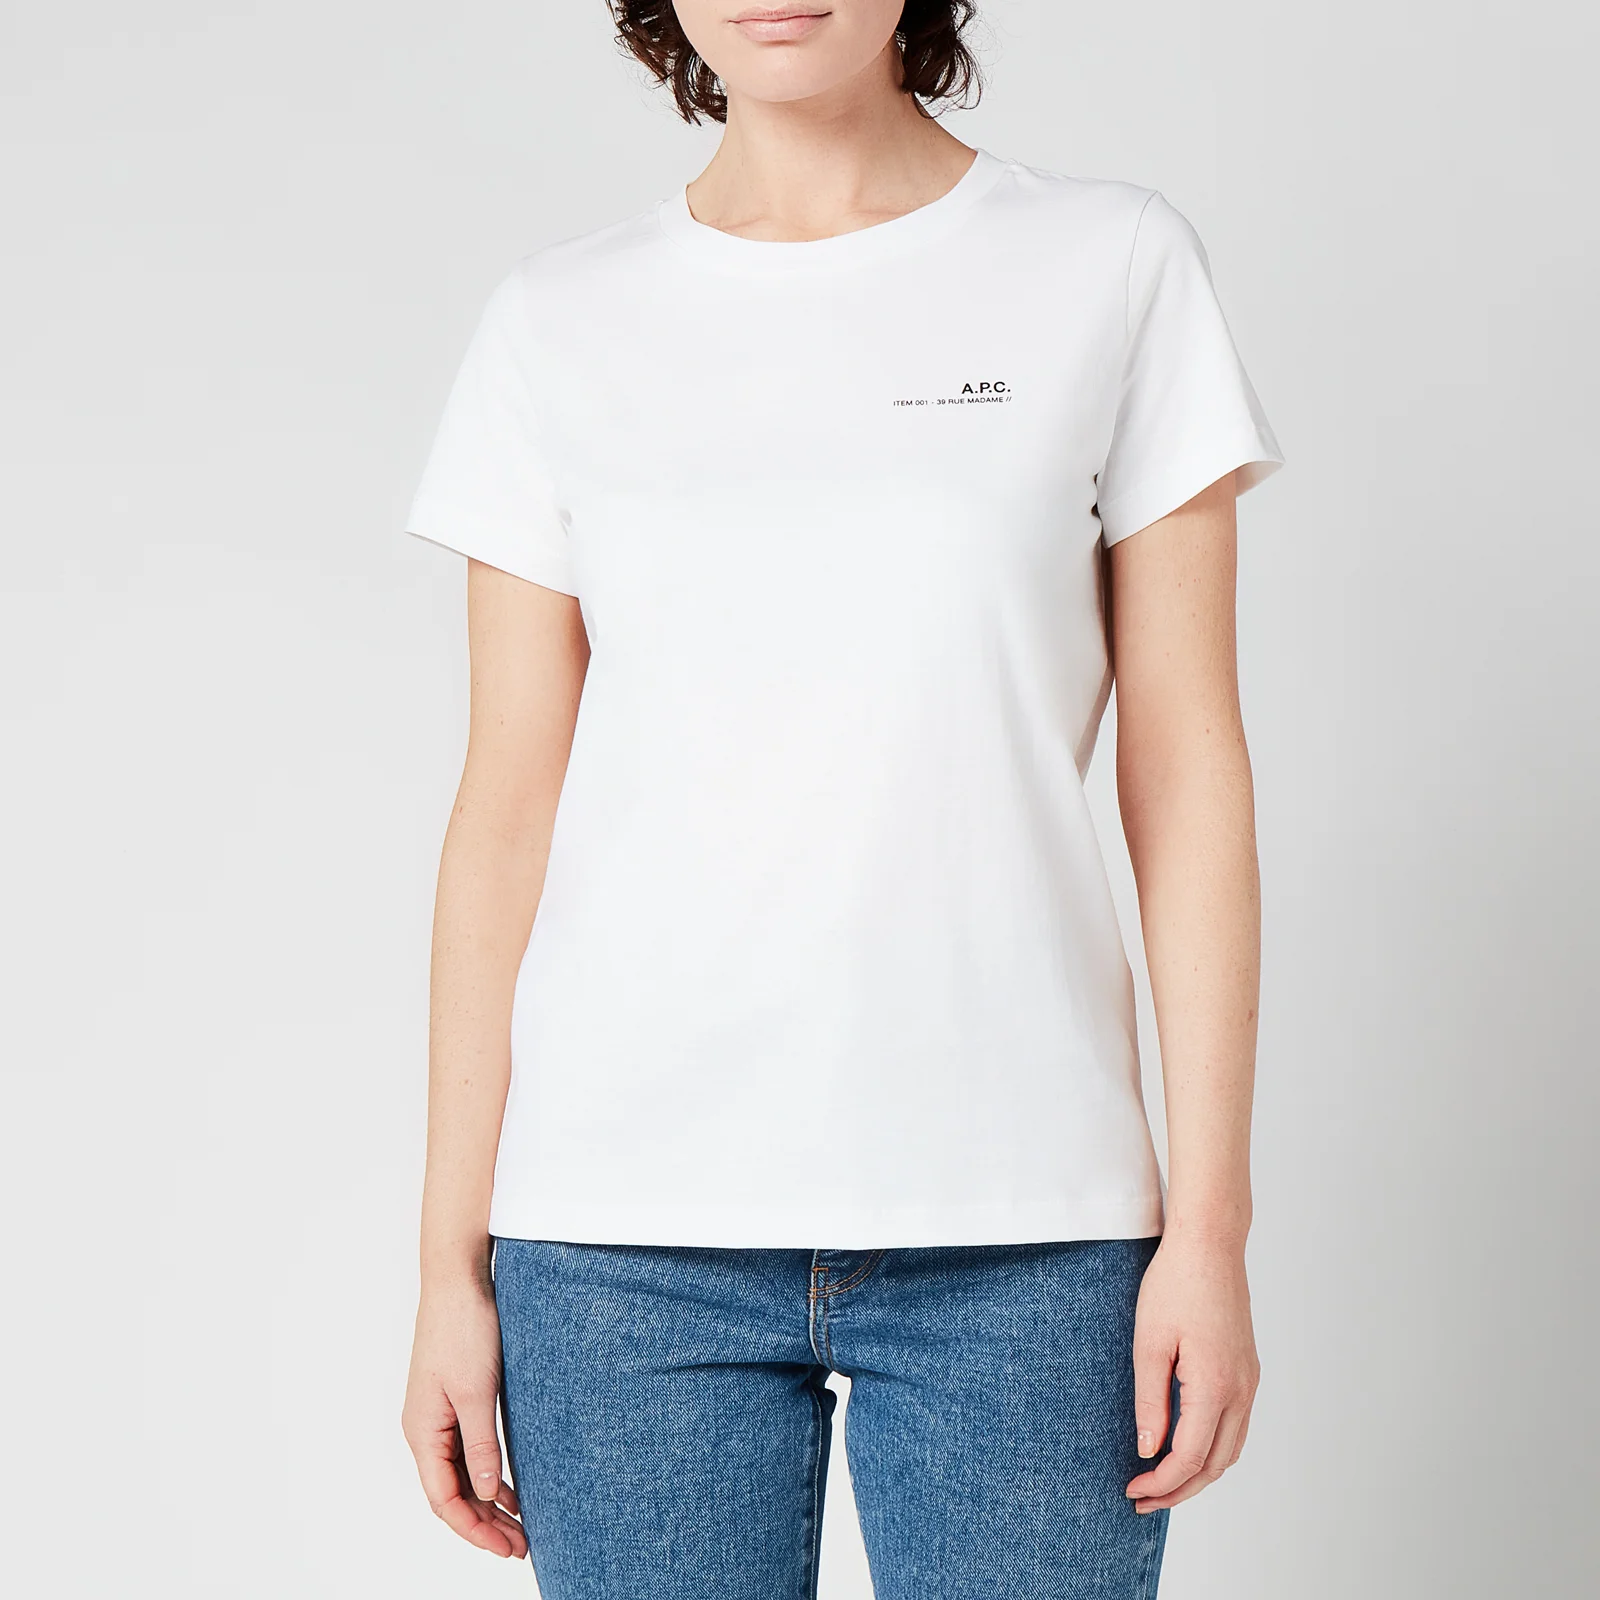 A.P.C. Women's Small Logo T-Shirt - White Image 1